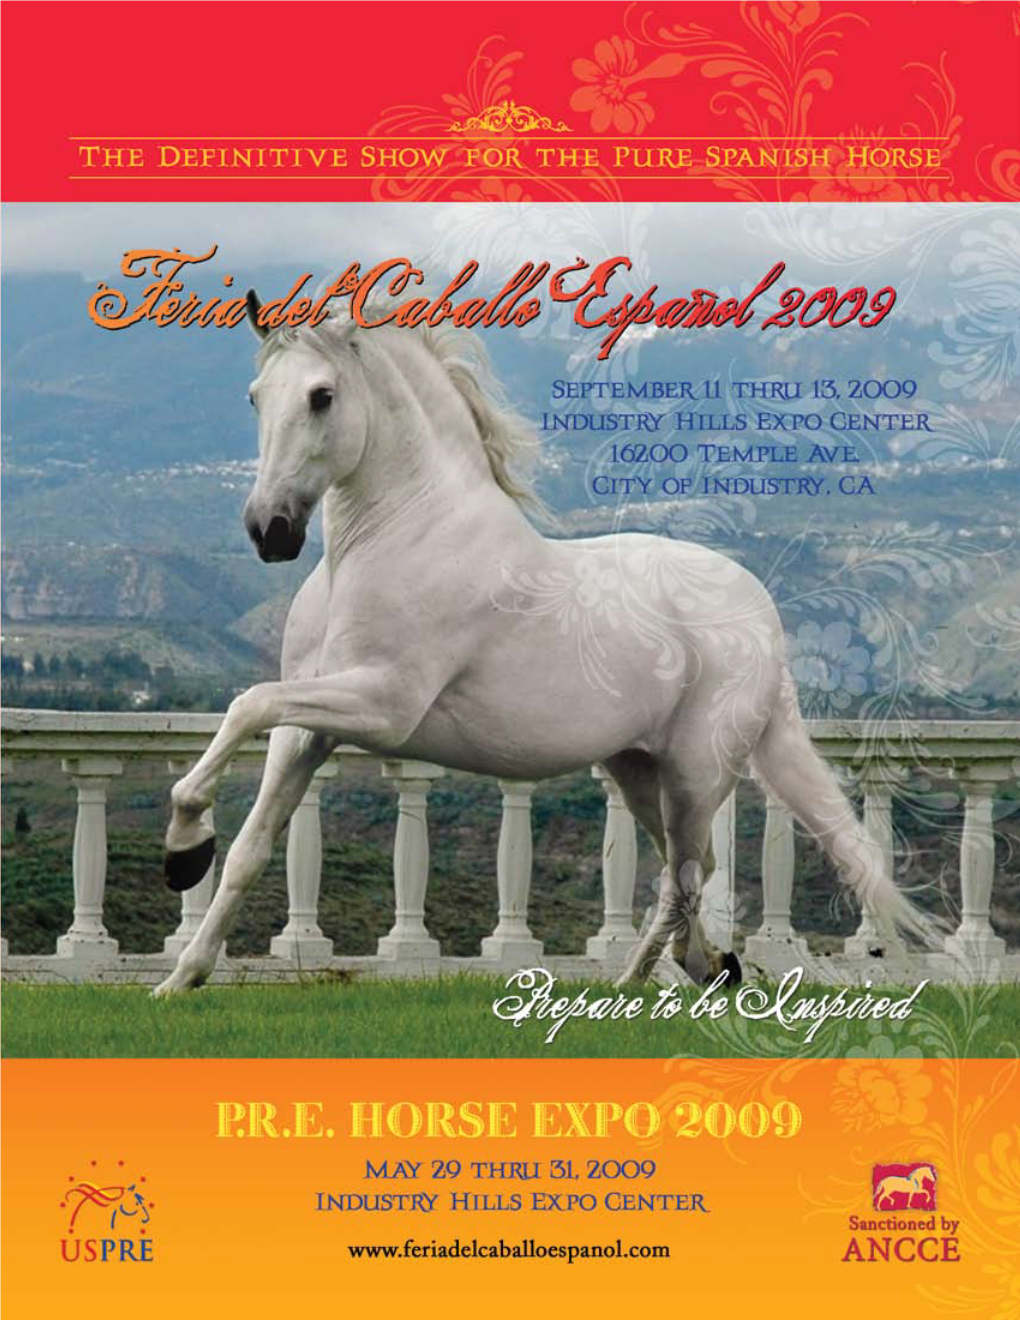 Feria Del Caballo Español Book Now Available!